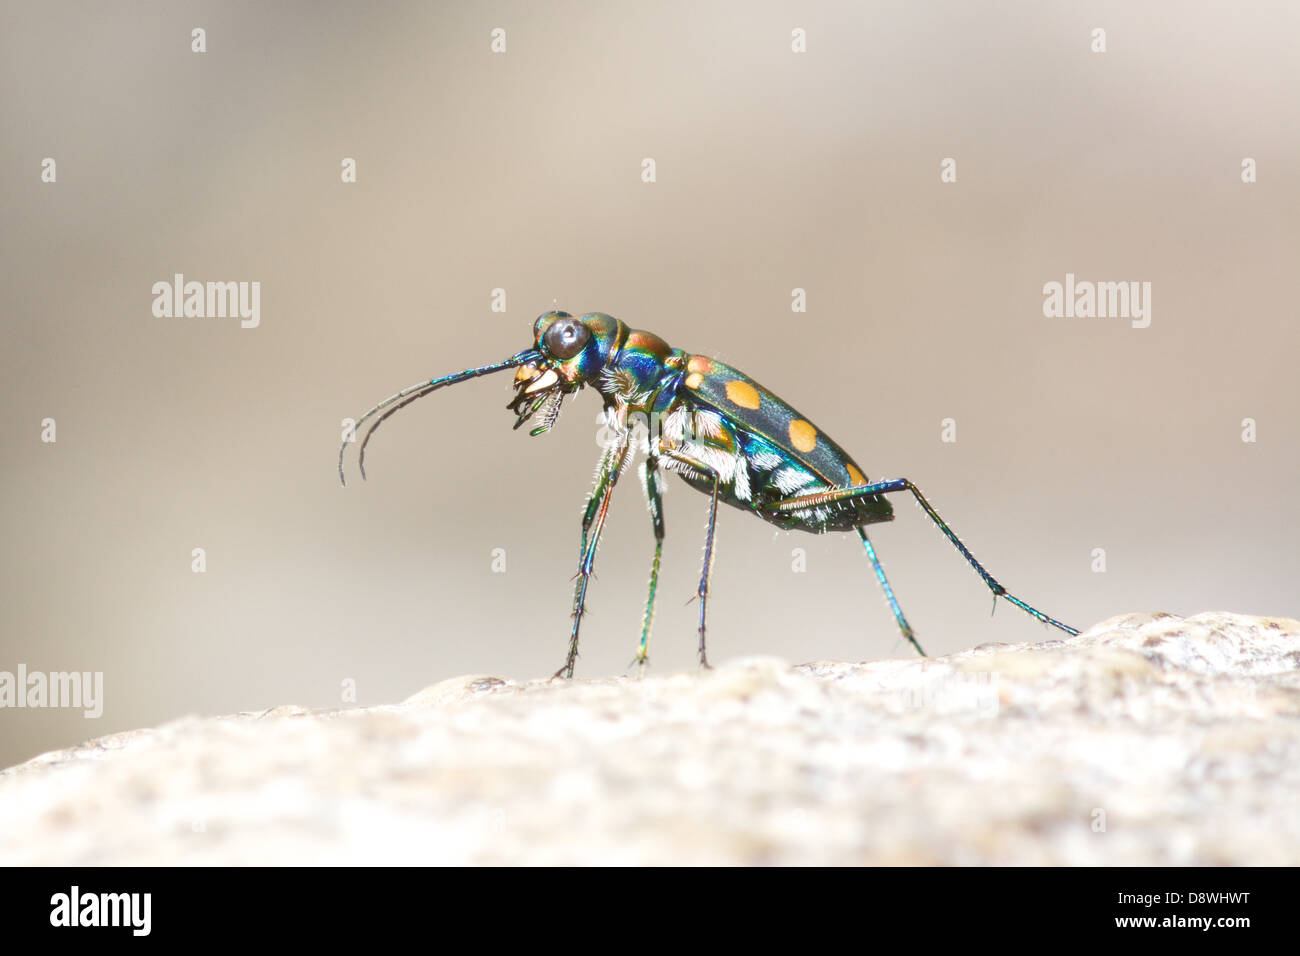 Tiger Beetle (Cosmodela aurulenta juxtata). Chaloem Phrakiat Thai Prachan National Park, Thailand. Stock Photo